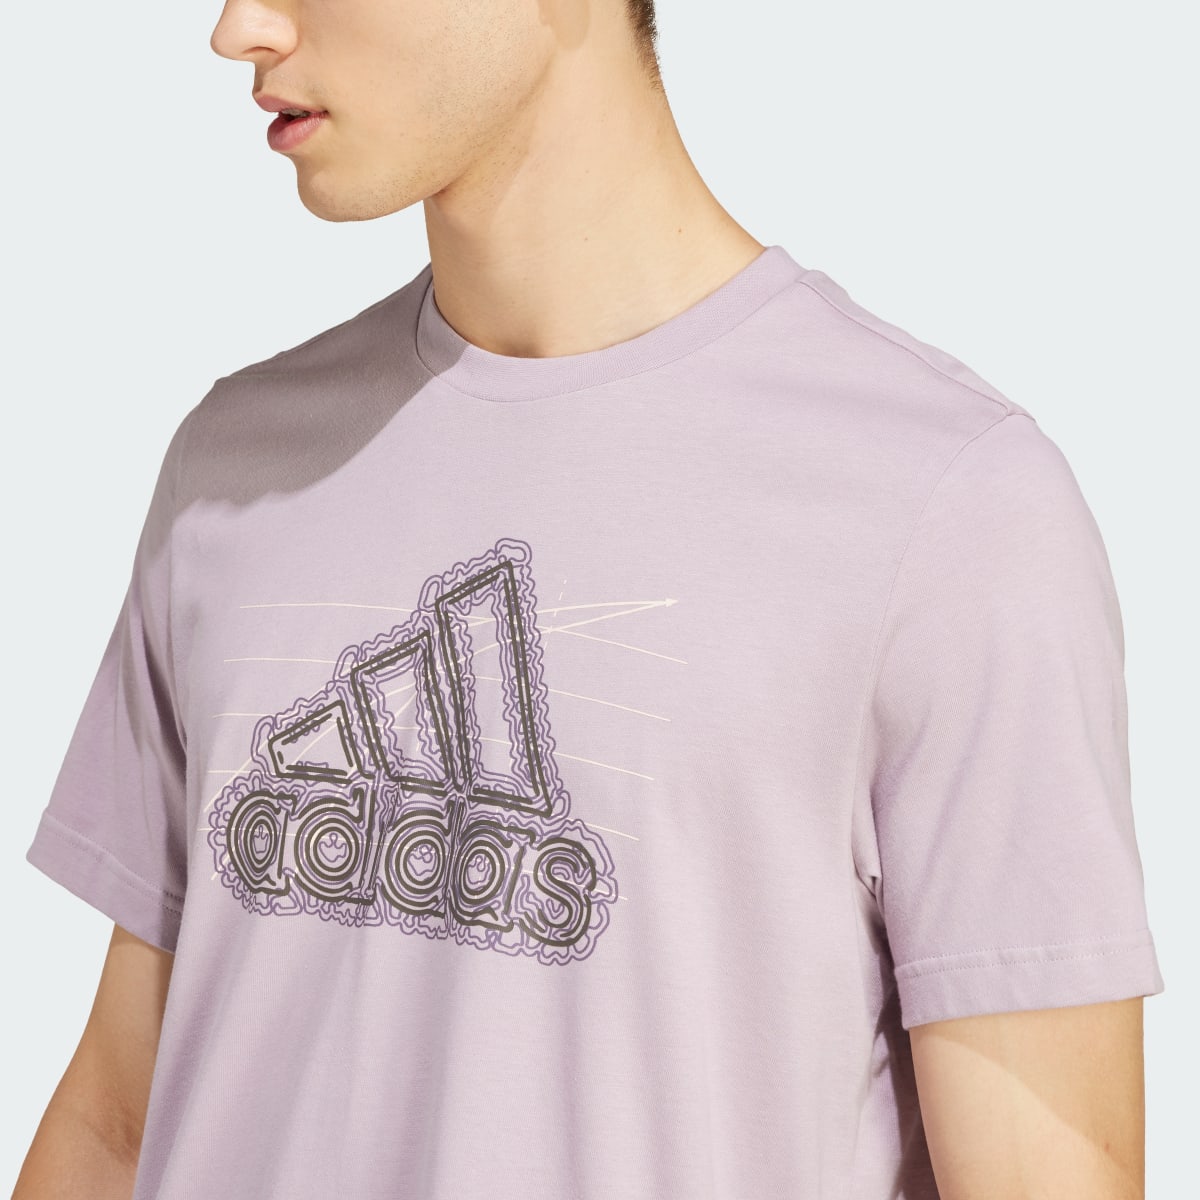 Adidas Growth Badge Graphic T-Shirt. 6